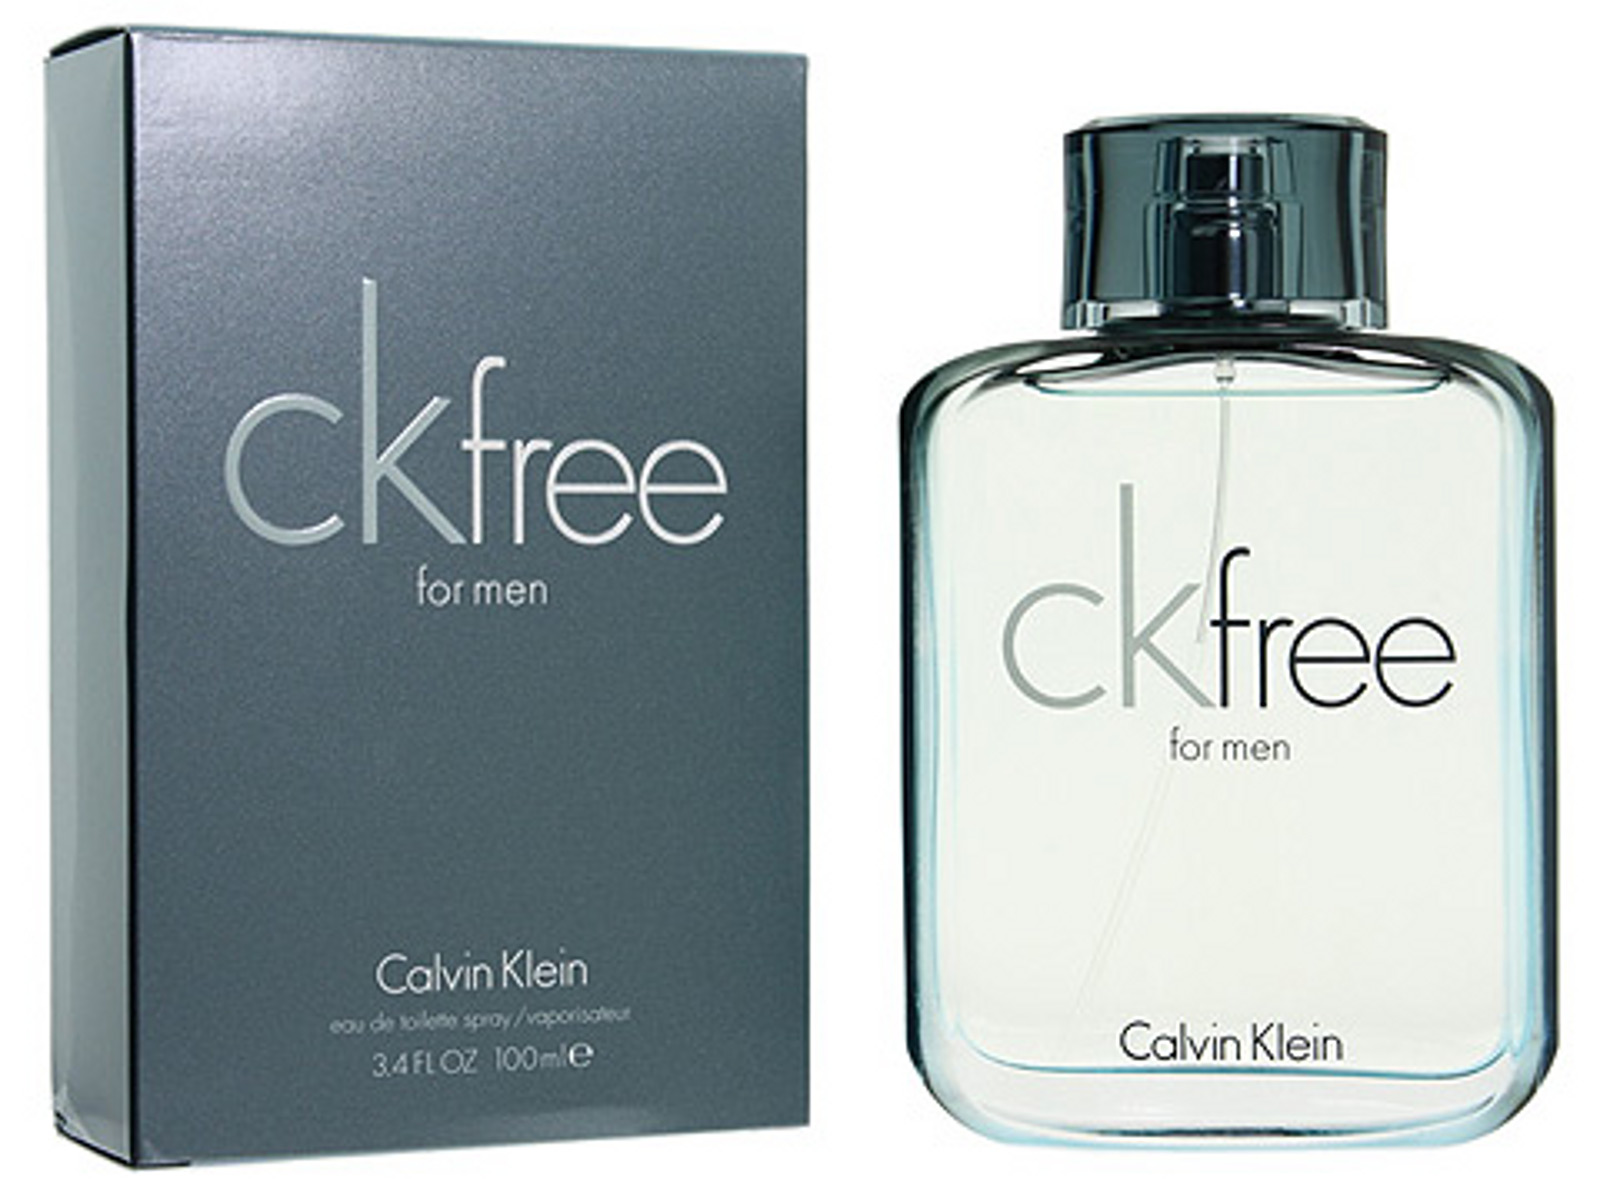 **New** CK Free by Calvin Klein Eau De Toilette Spray ~ Full Size ...